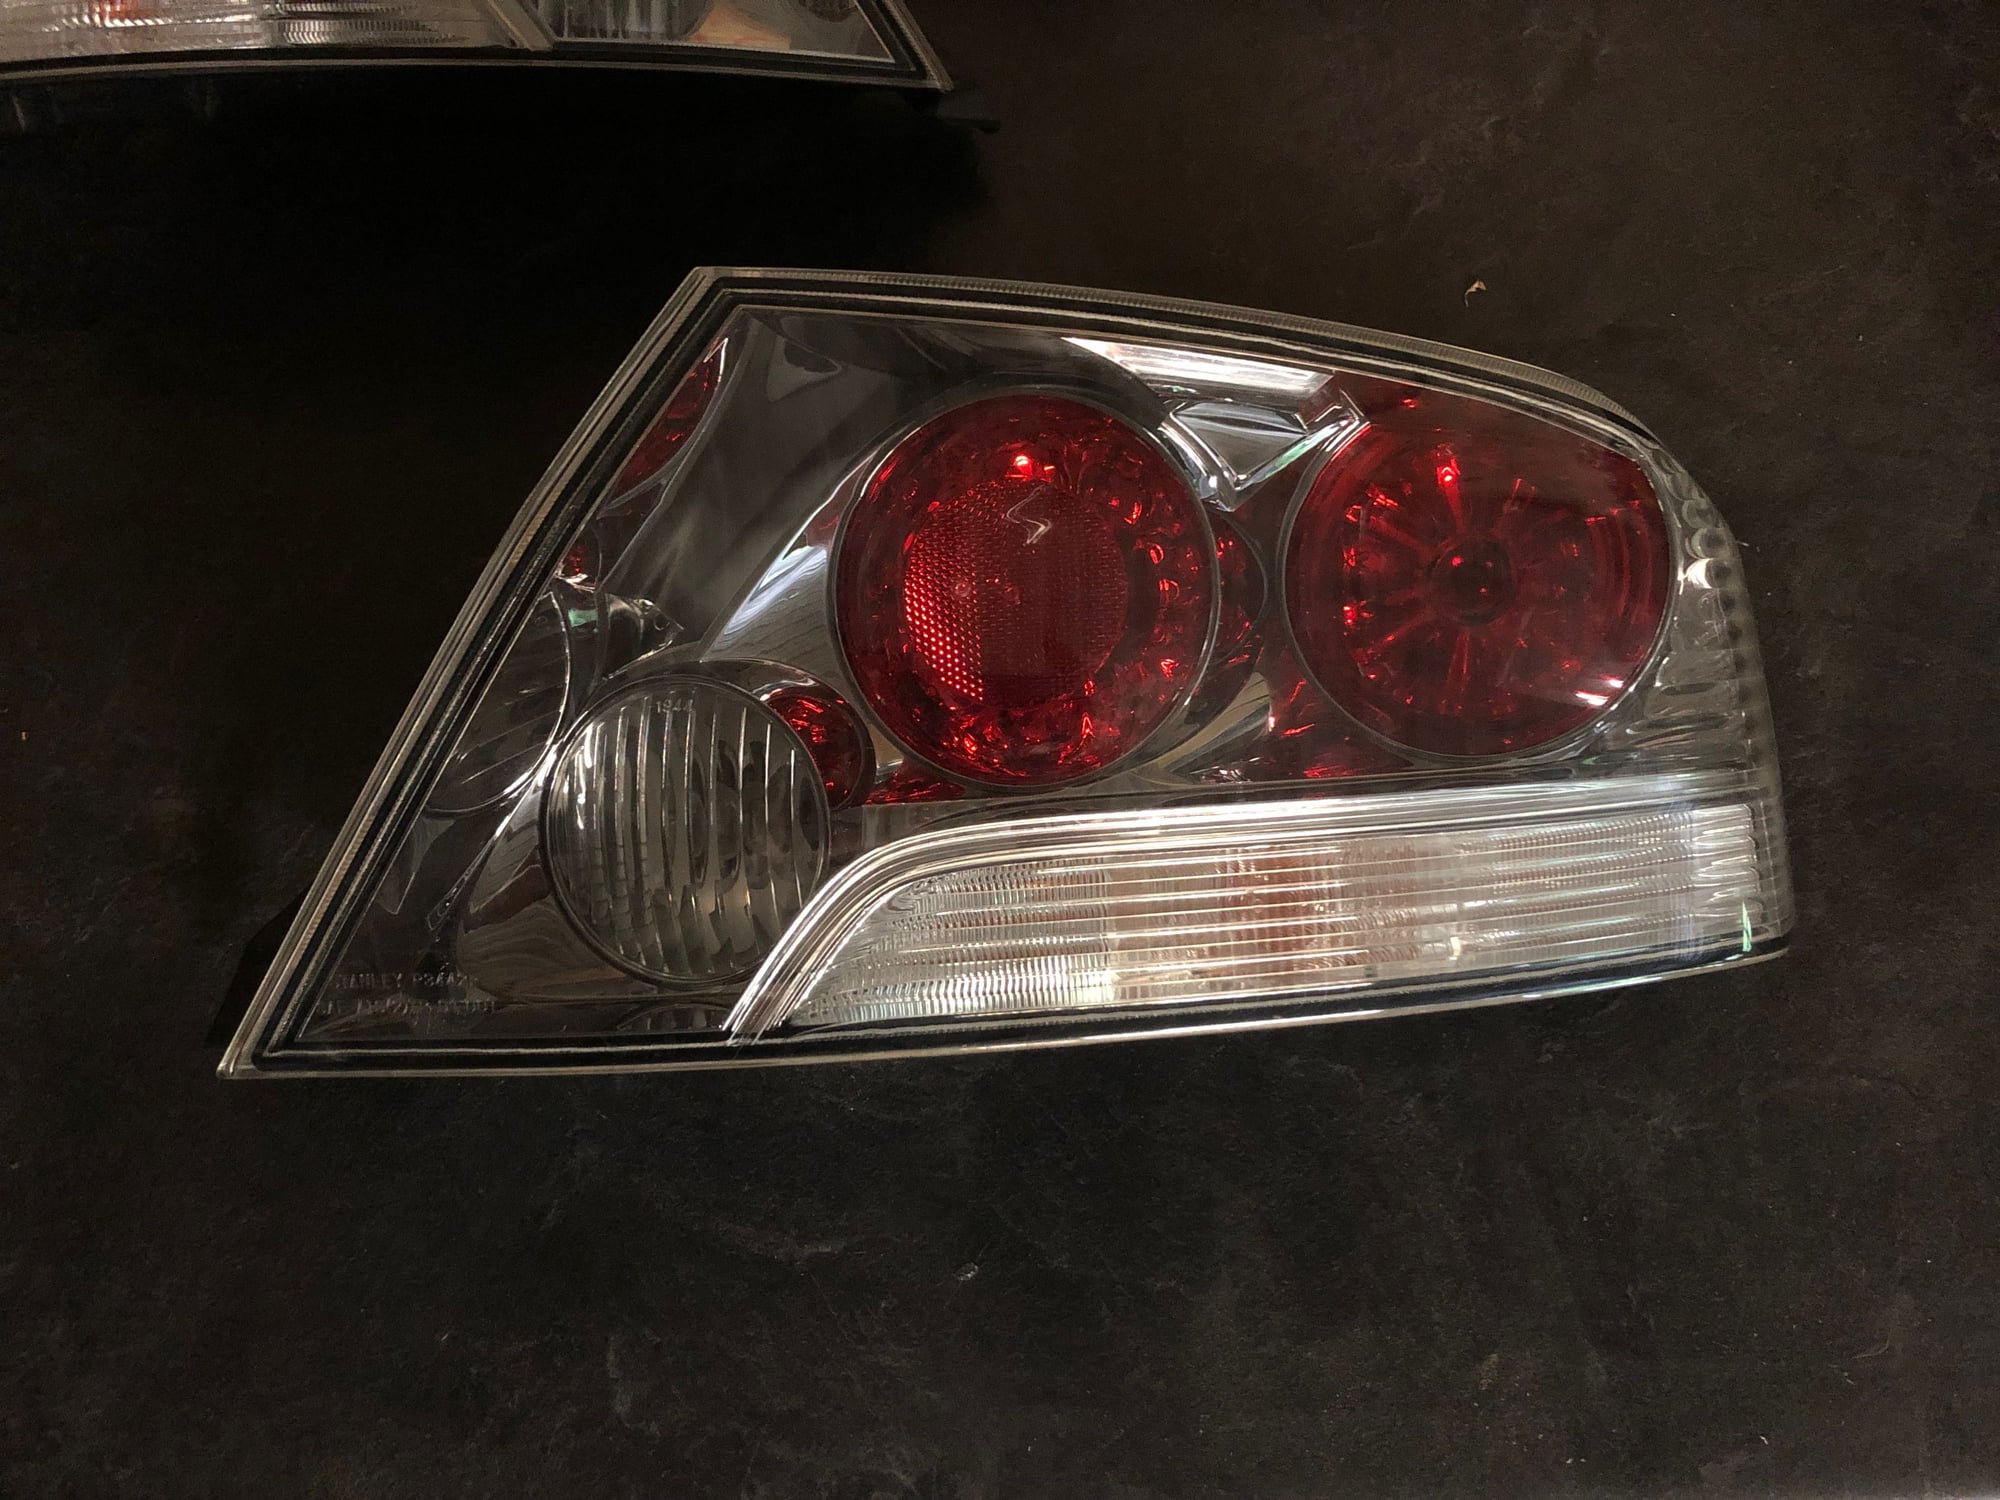 Lights - EVO 8 Tail Lights (Pair) - Used - 2003 to 2006 Mitsubishi Lancer Evolution - Saratoga Springs, NY 12866, United States